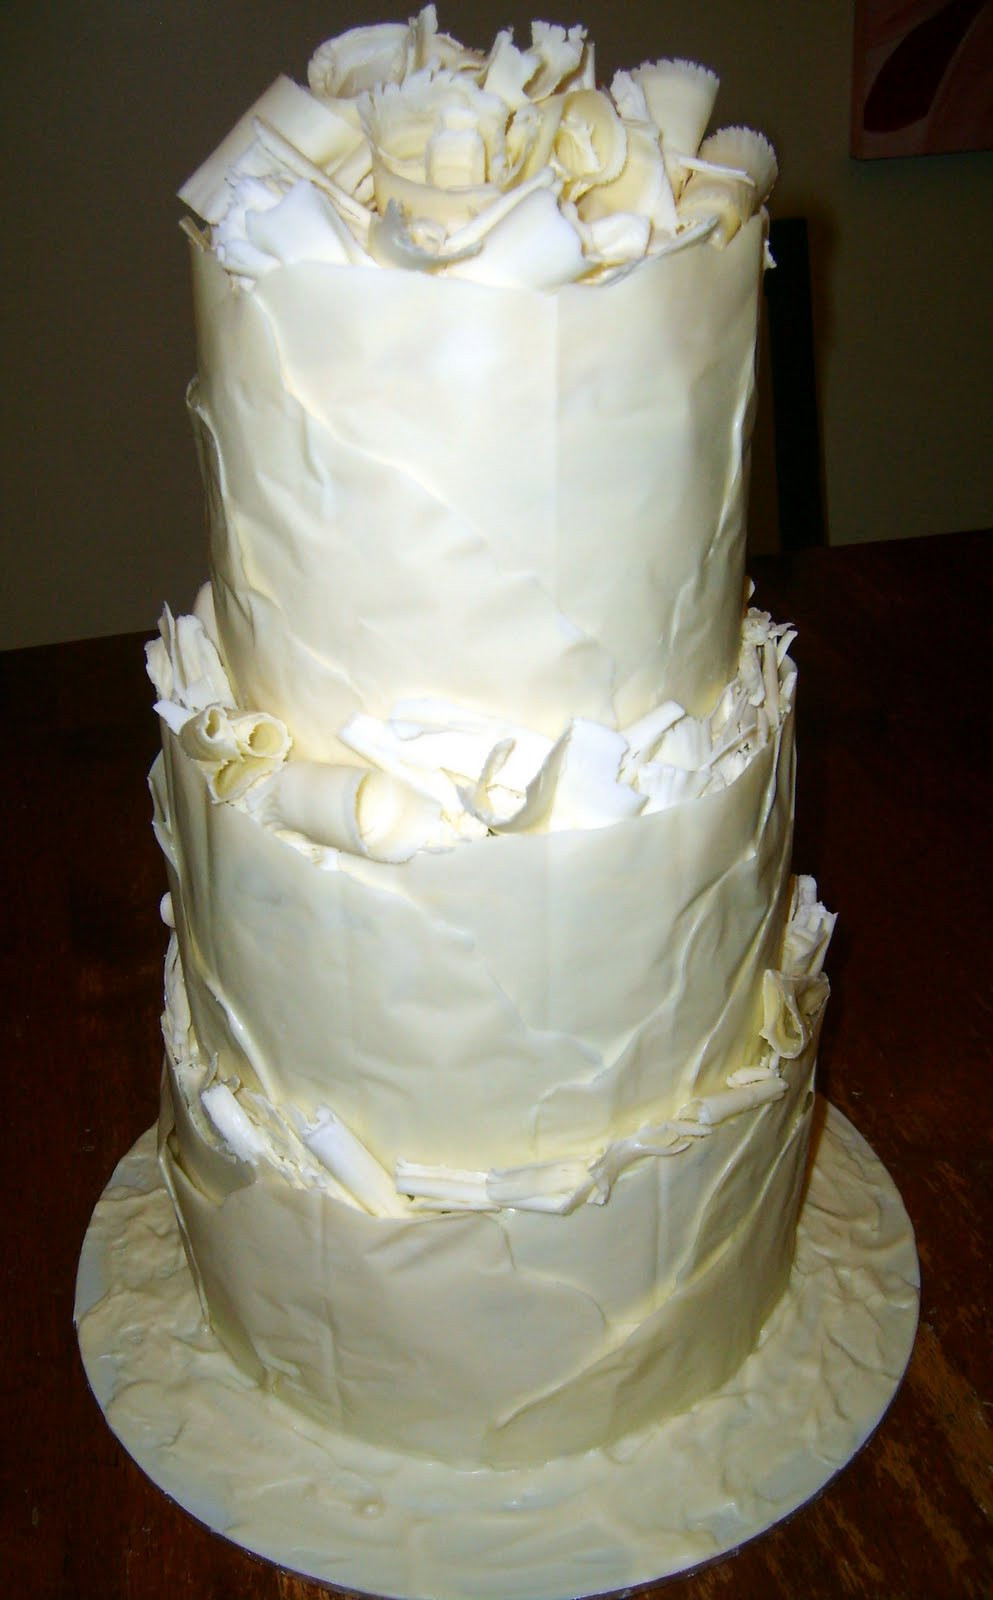 White Chocolate Wedding Cake
 Caketopia White Chocolate Wrapped Wedding Cake